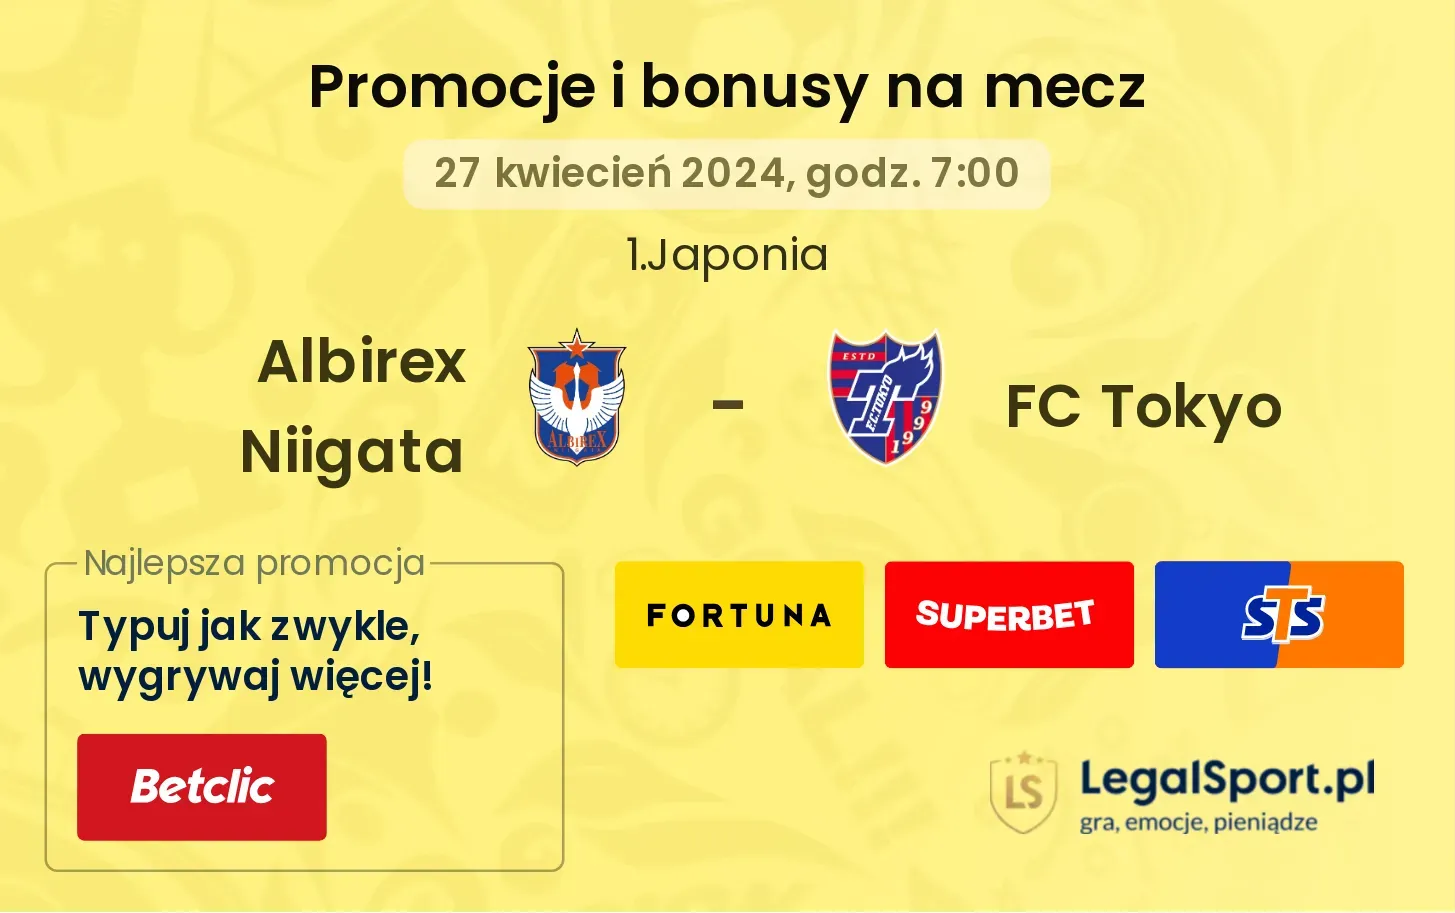 Albirex Niigata - FC Tokyo promocje bonusy na mecz